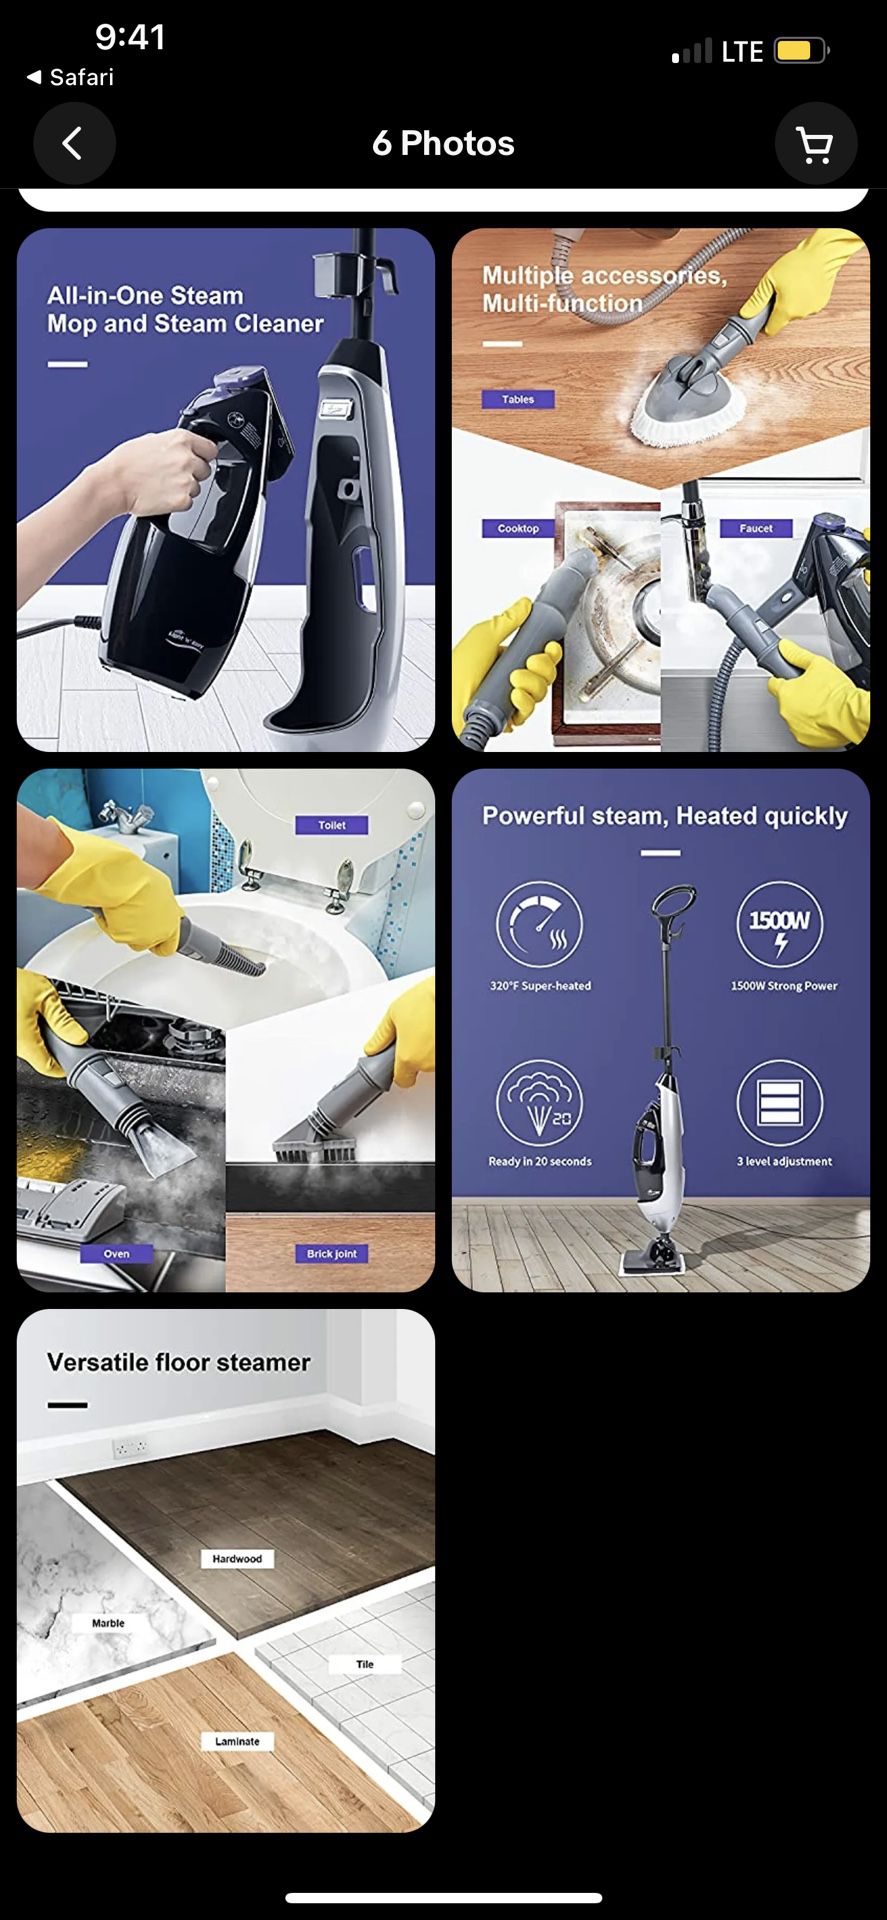 Light 'N' Easy Steam Mop Cleaner with Detachable Handheld Unit Floor Steamer New